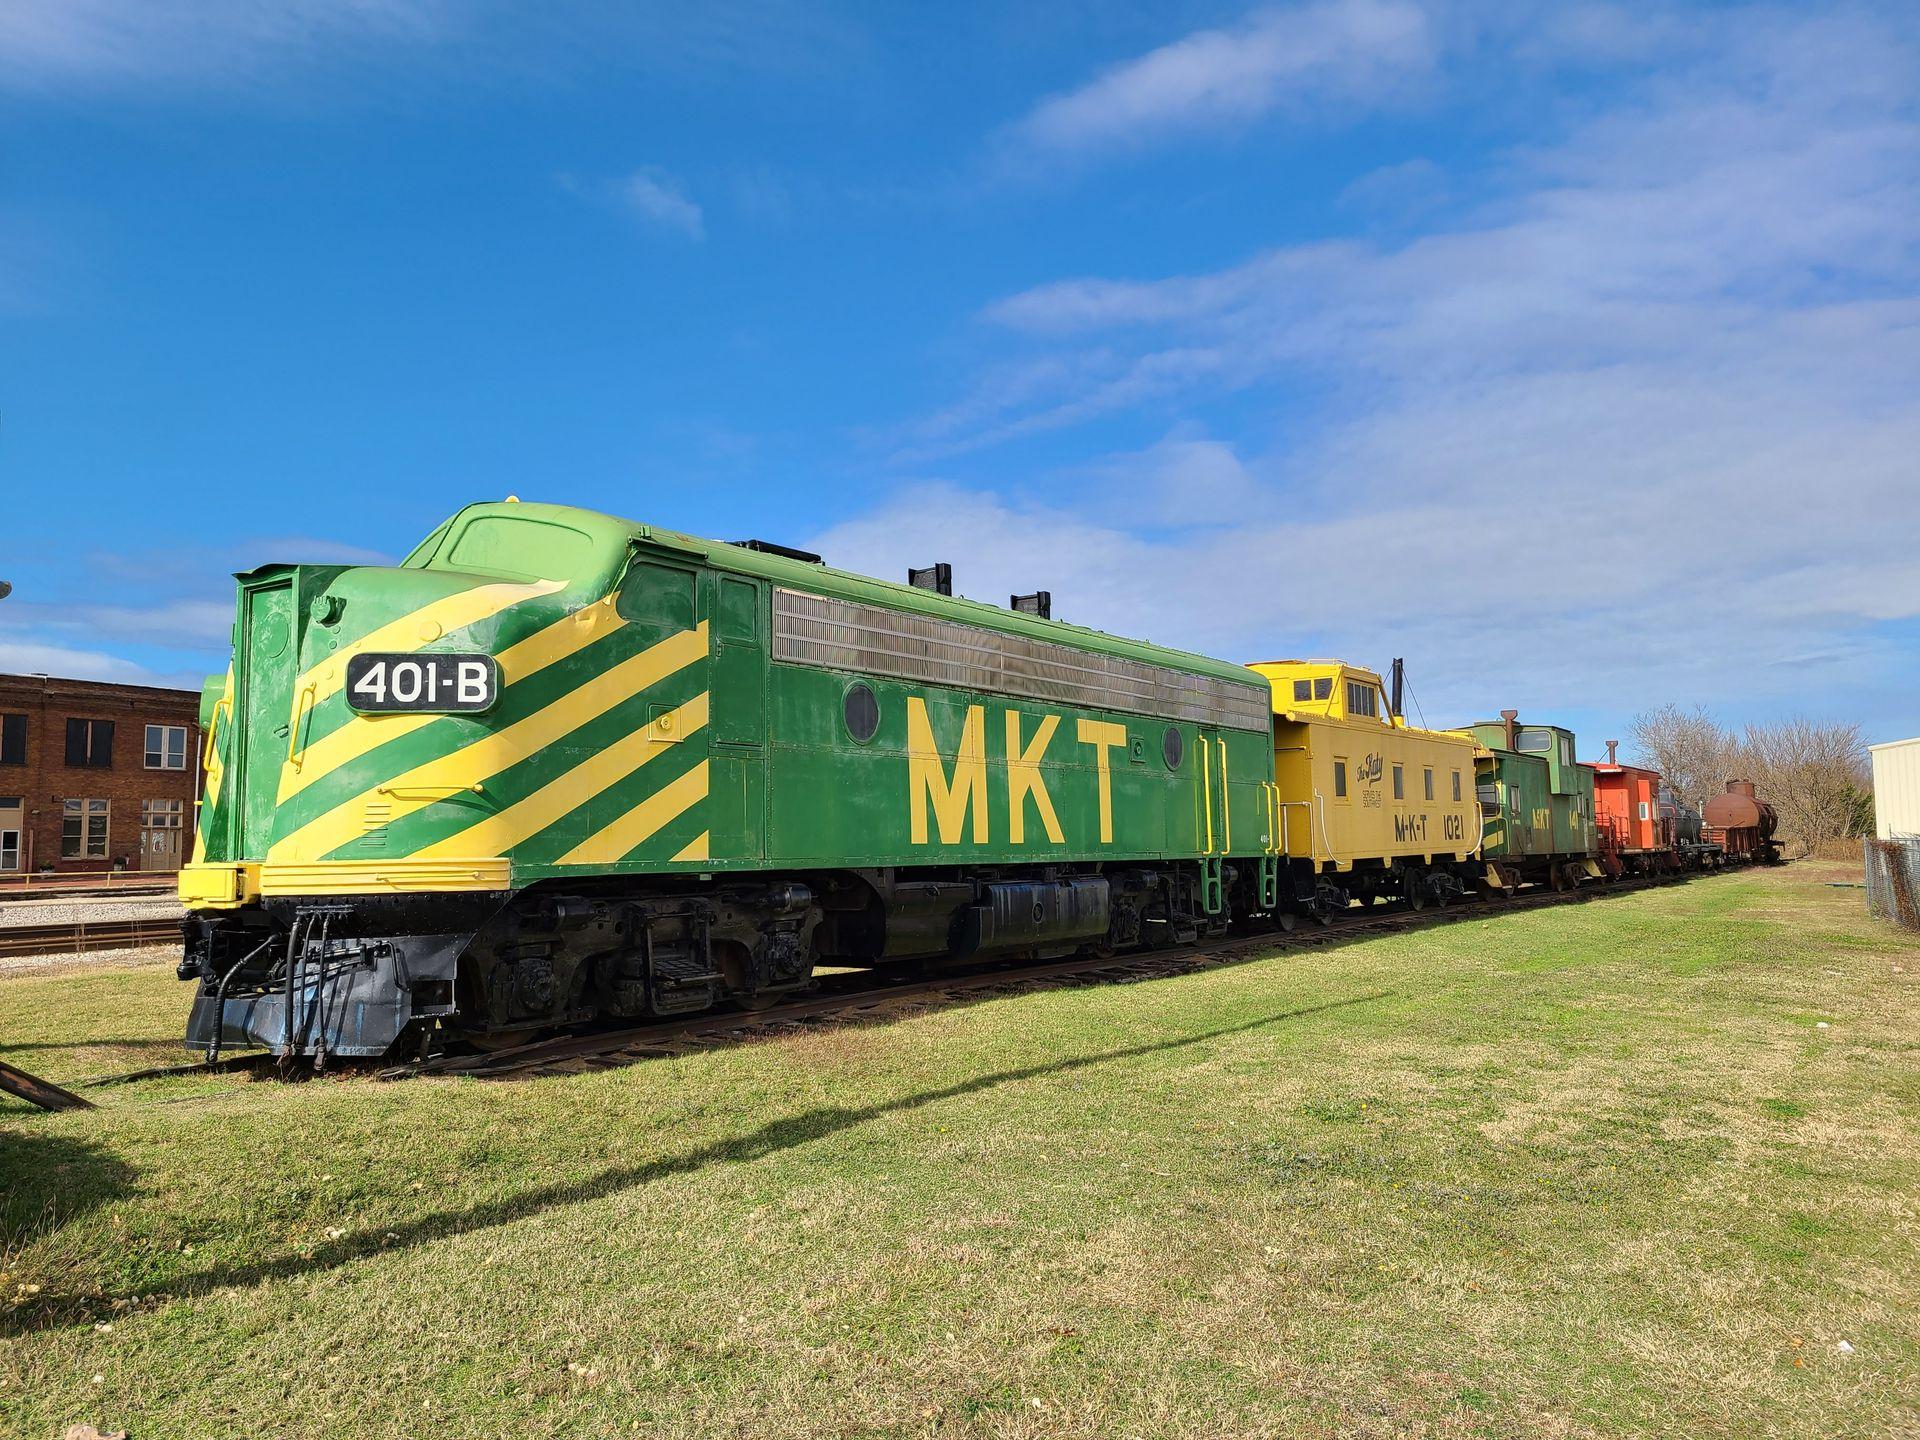 A green and yellow train at the Katy Depot.